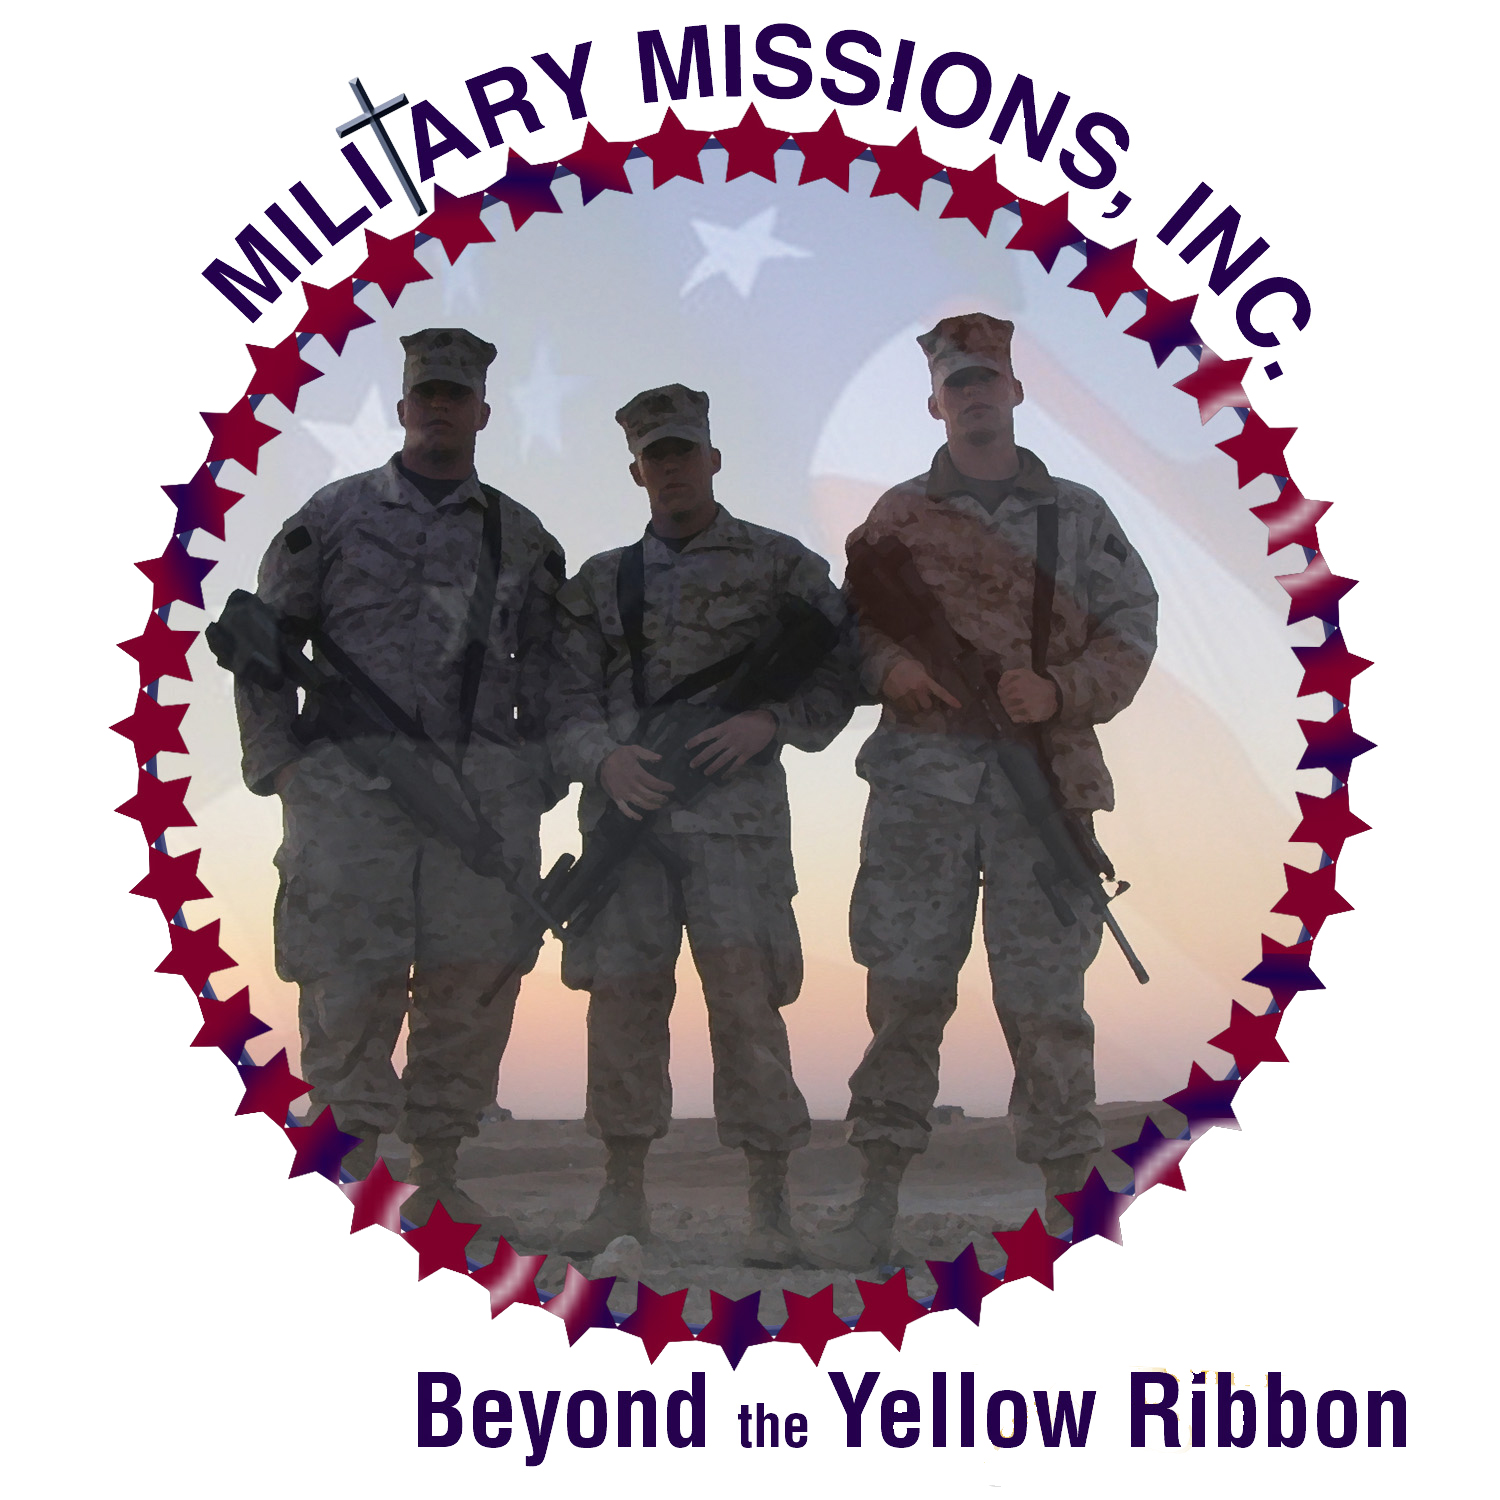 Military Missions Inc logo